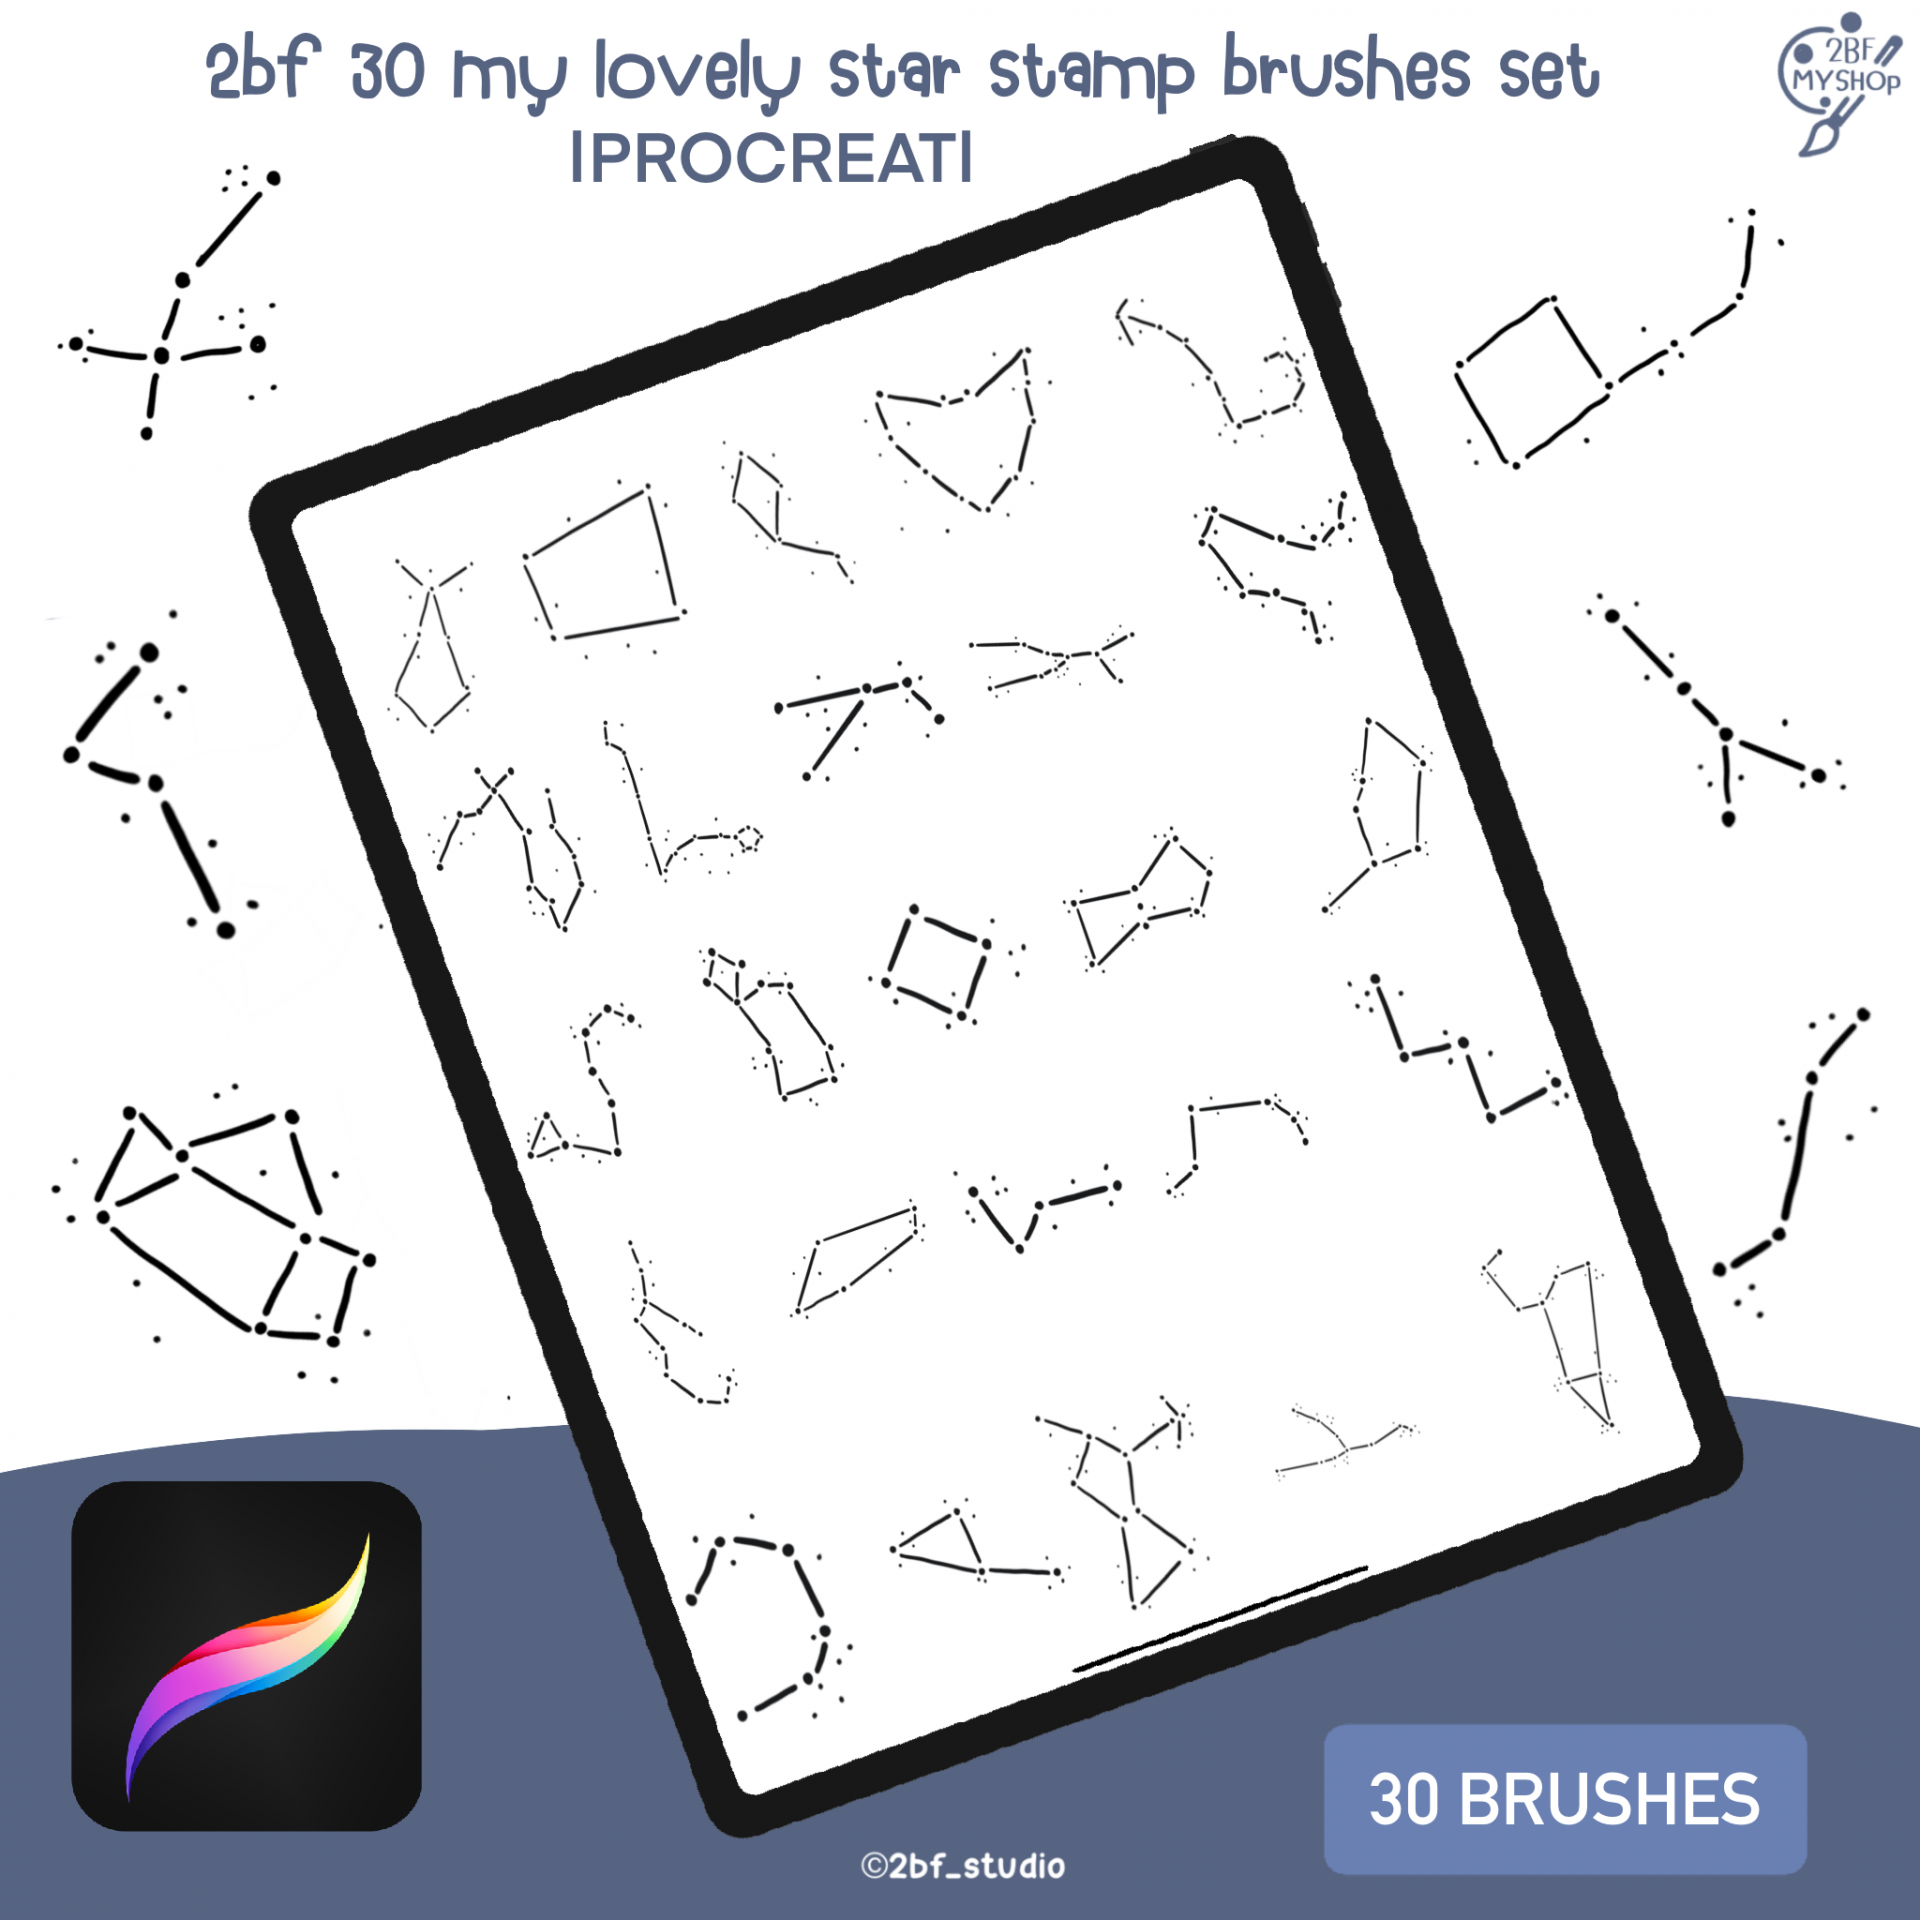 2bf 30 my lovely star stamp brushes set   |PROCREAT BRUSHED|